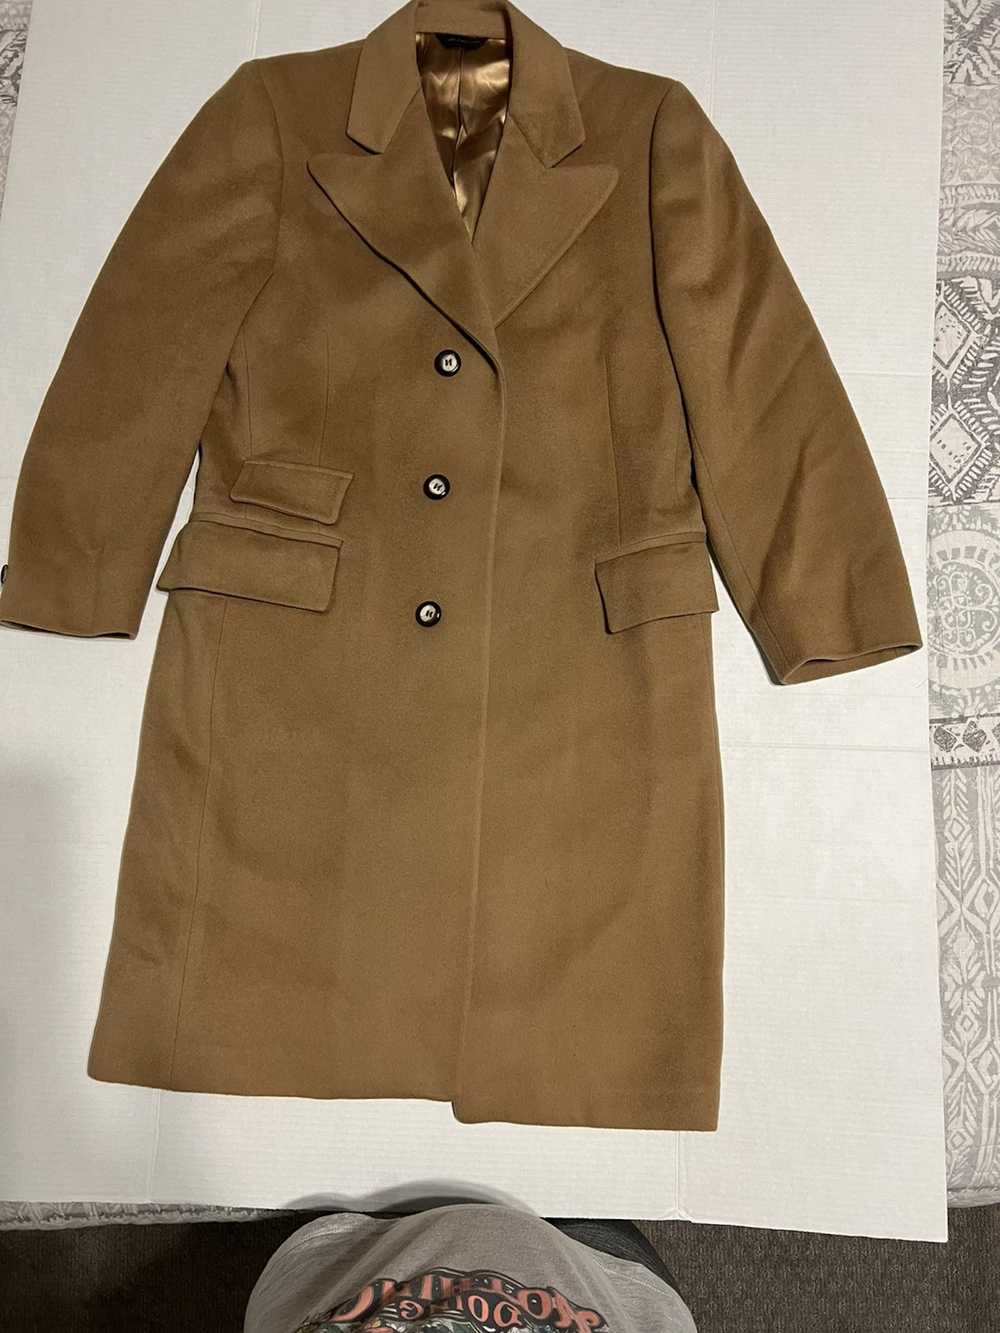 Vintage Geoffrey Beene wool Cashmere trench coat - image 1